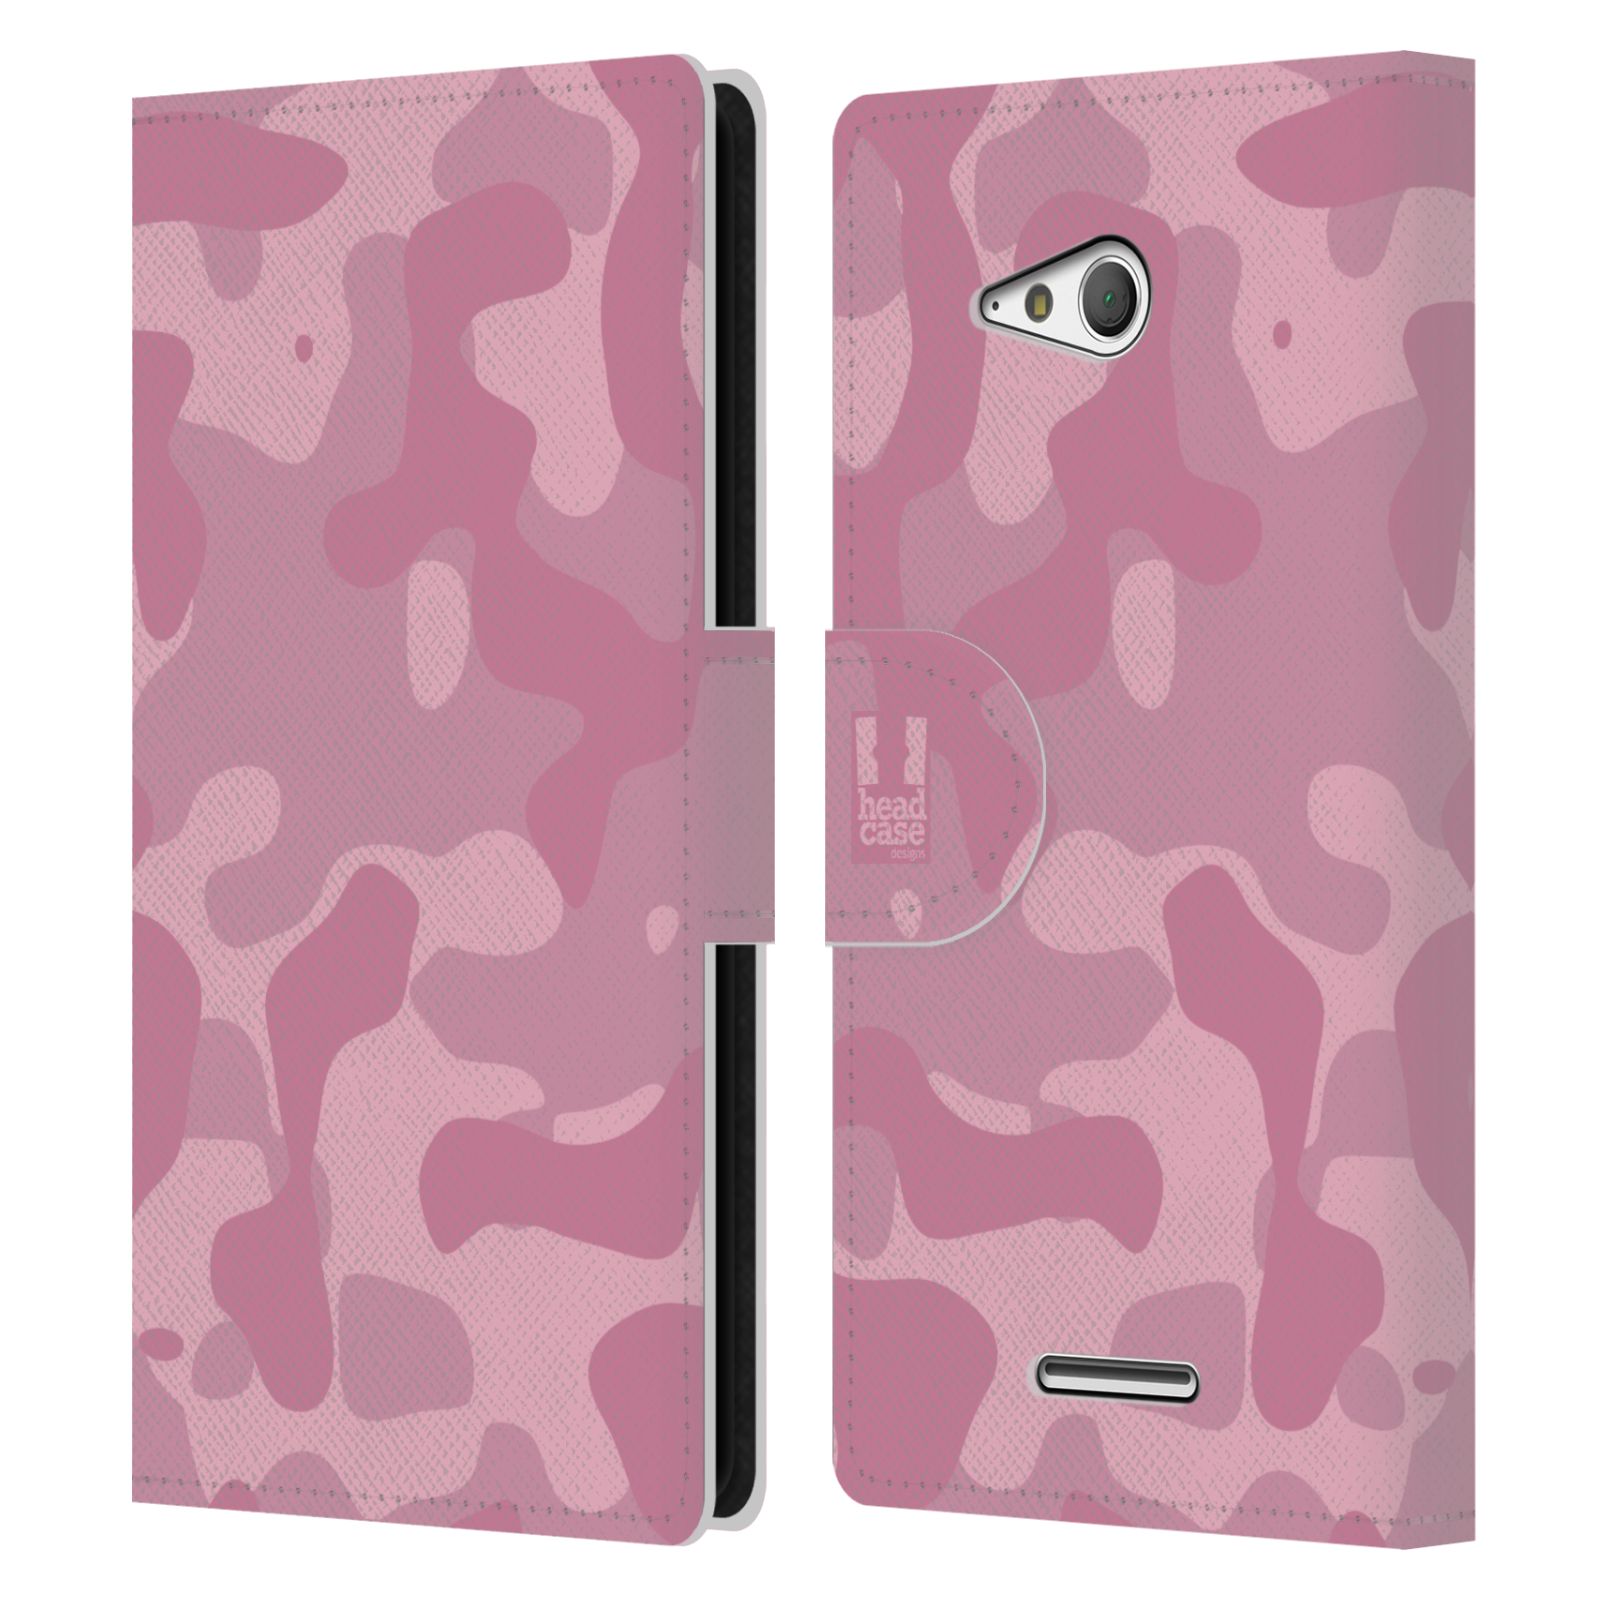 HEAD CASE Flipové pouzdro pro mobil SONY XPERIA E4g lehká barevná kamufláž růžová